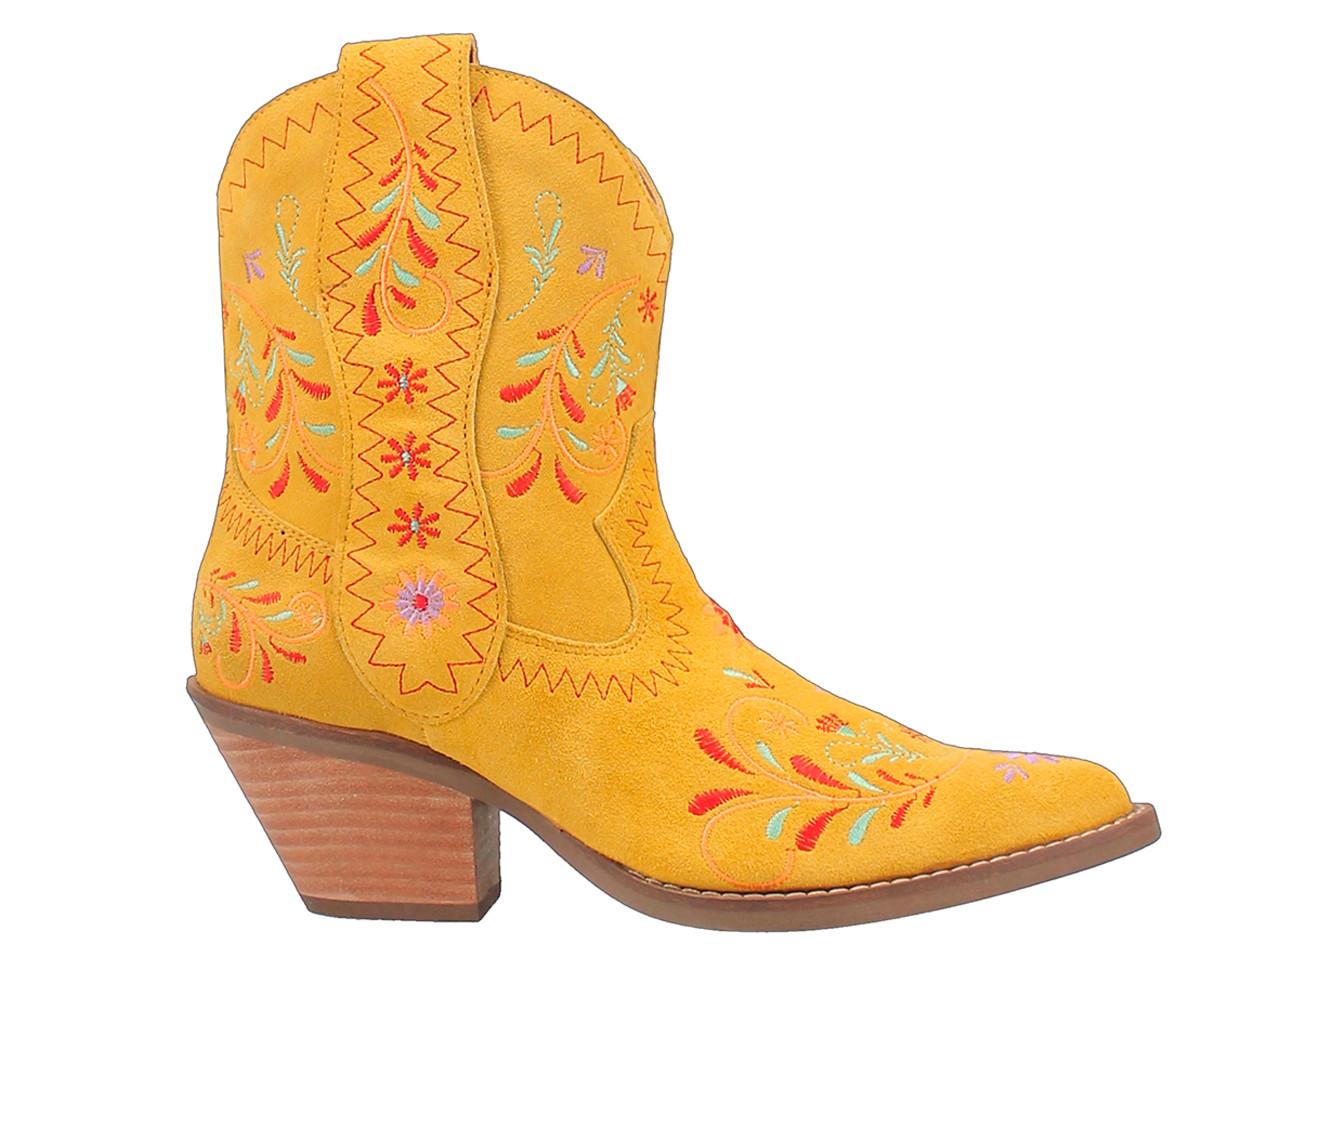 Women's Dingo Boot Sugar Bug Western Boots